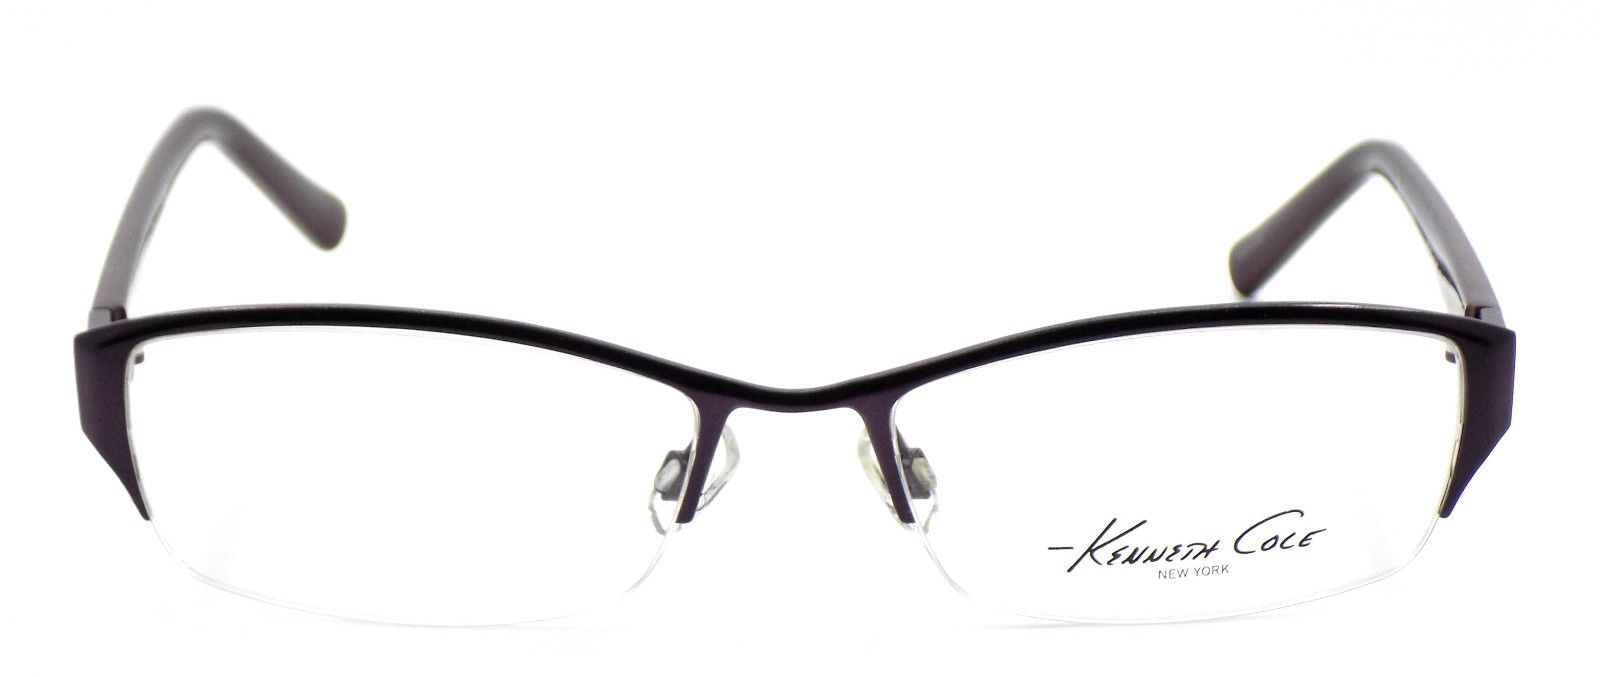 2-Kenneth Cole NY KC160 069 Women's Eyeglasses Frames 53-17-135 Bordeaux + Case-726773164052-IKSpecs